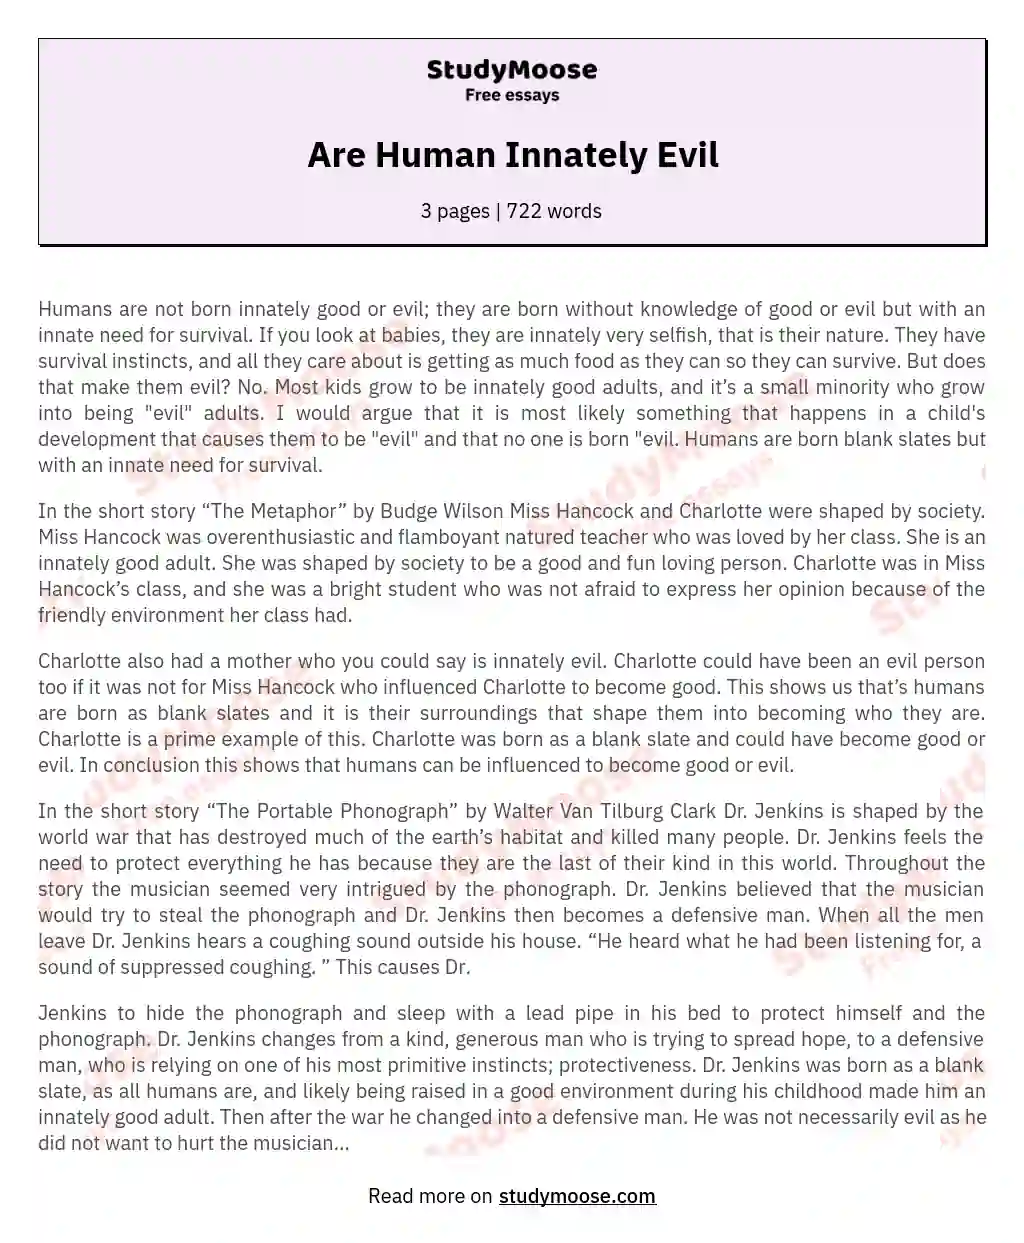 Are Human Innately Evil essay